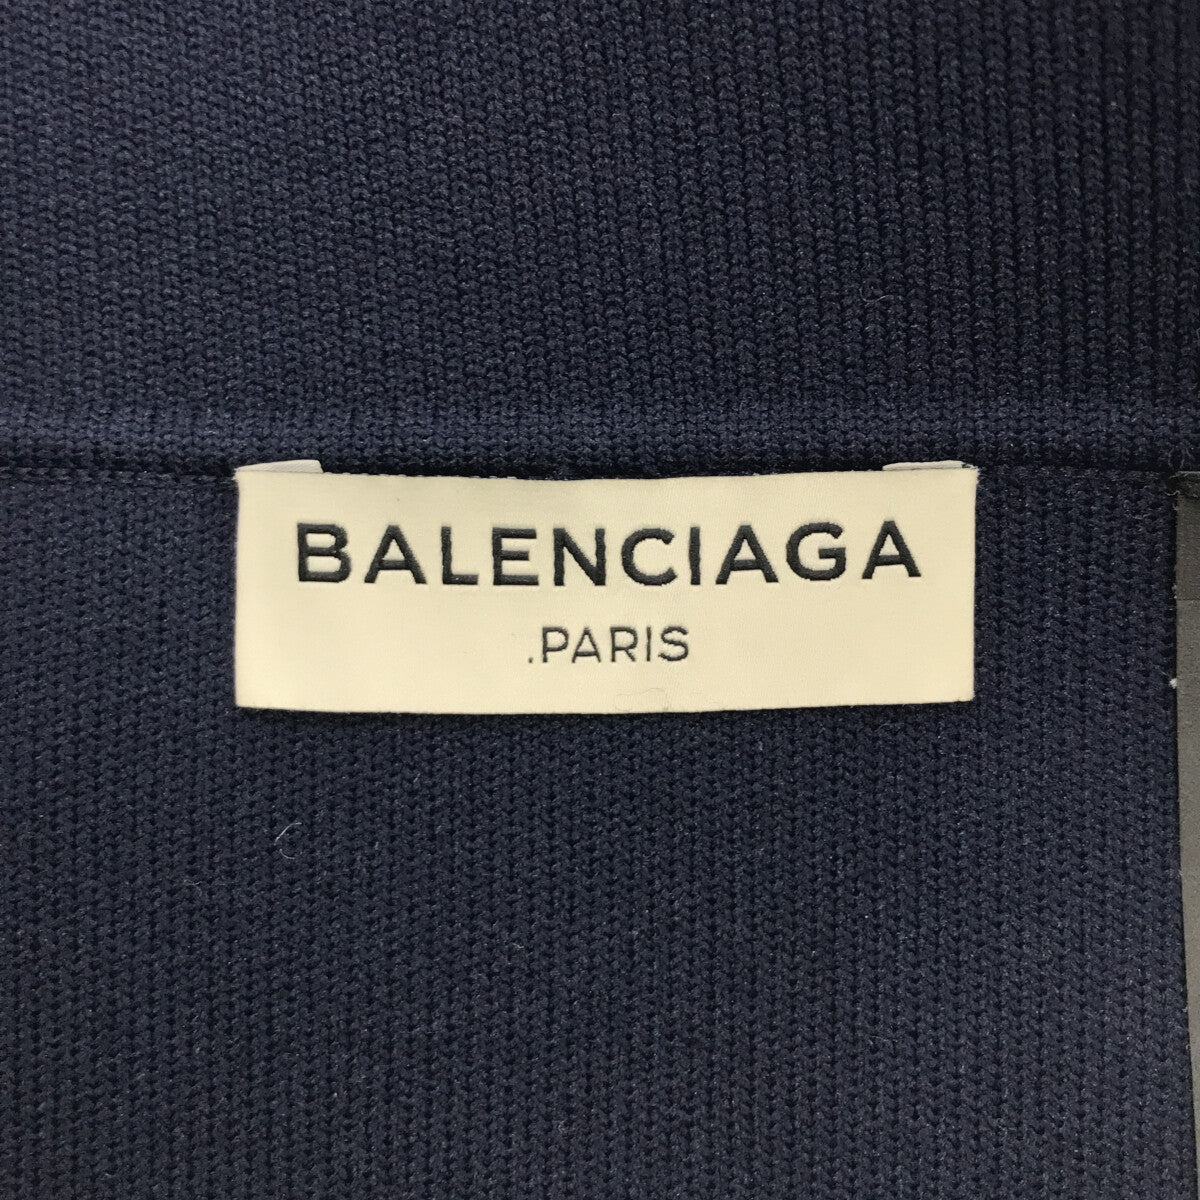 BALENCIAGA / バレンシアガ | ウール フレアスカート | 36 | ネイビー | レディース